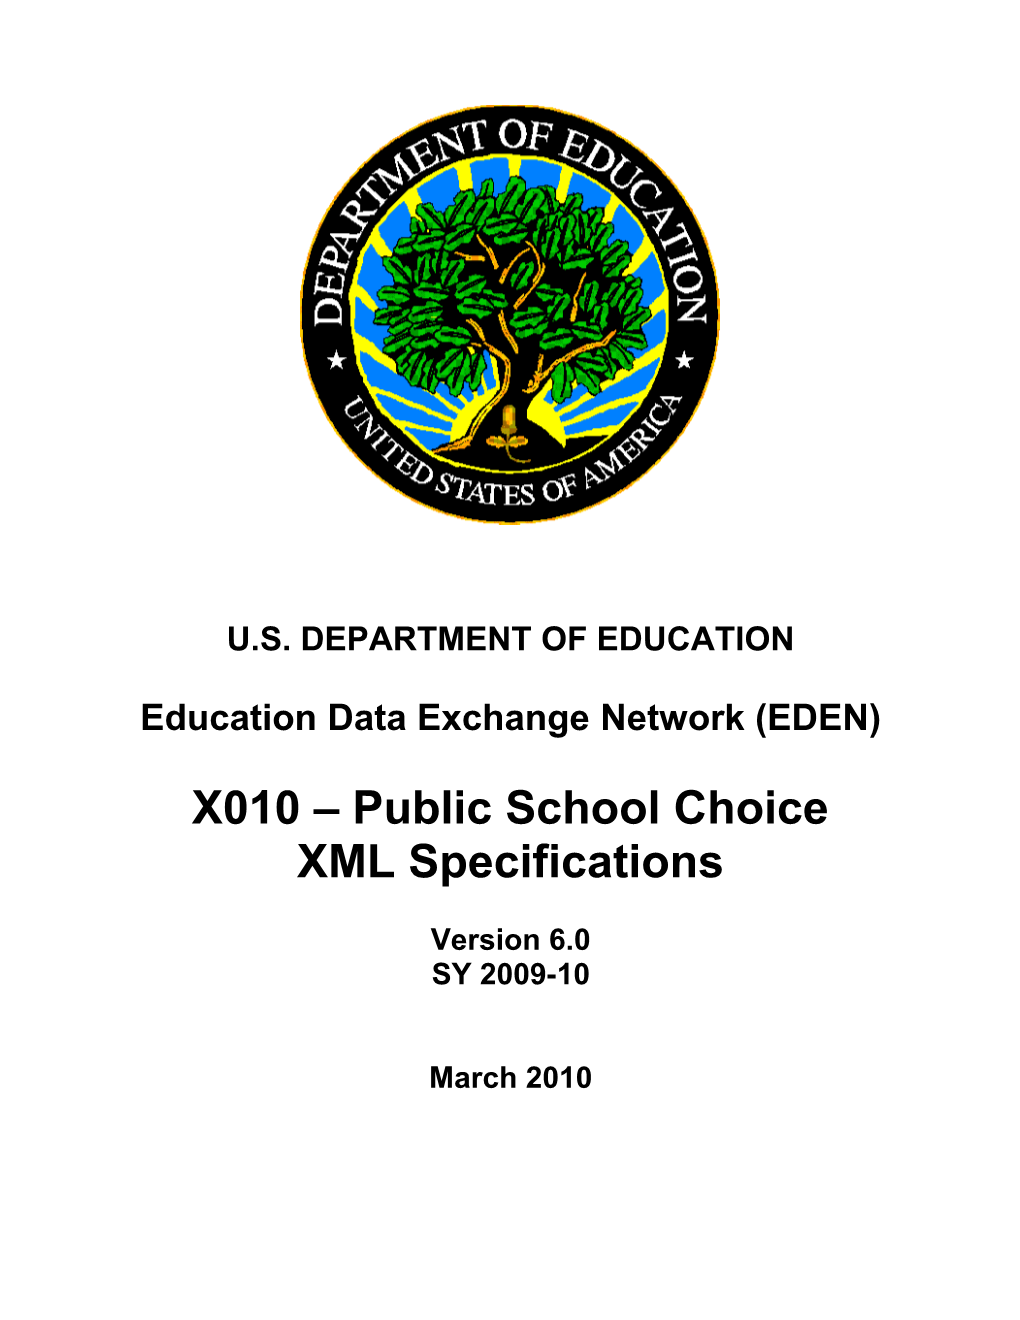 Public School Choice XML Specifications